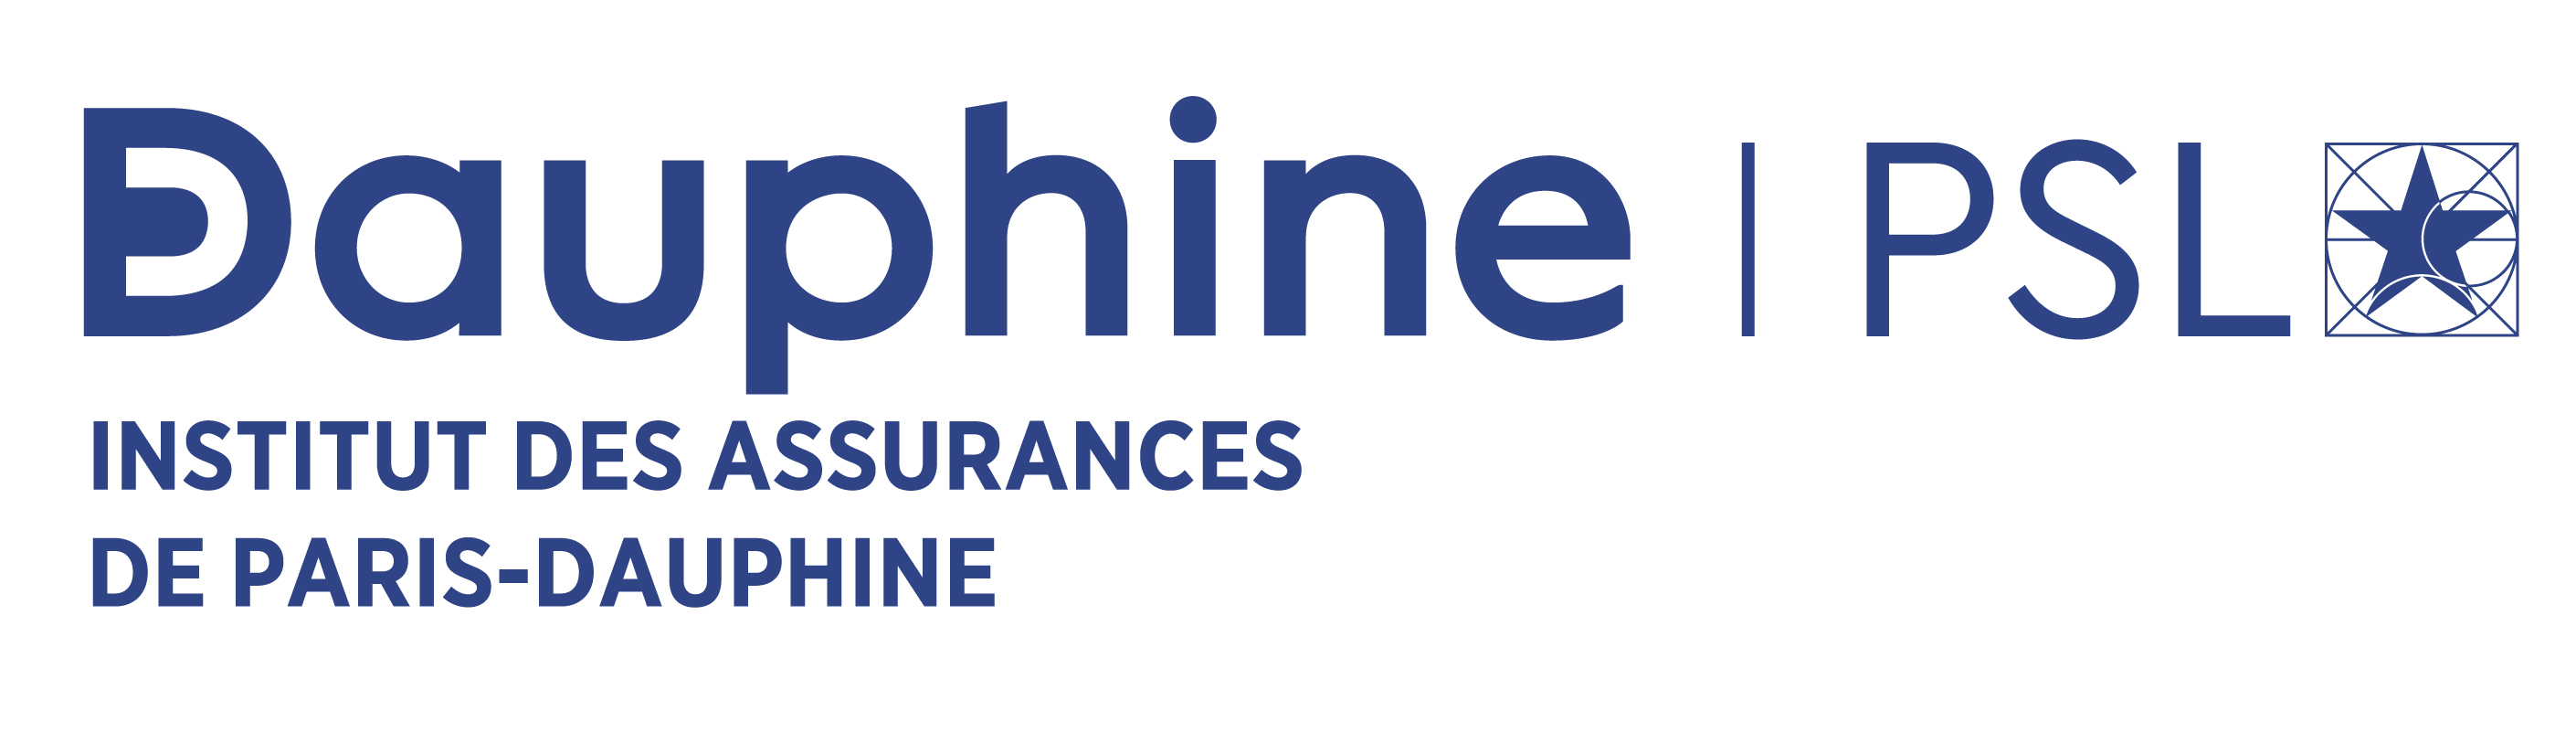 Institut des Assurances de Paris-Dauphine - IAP